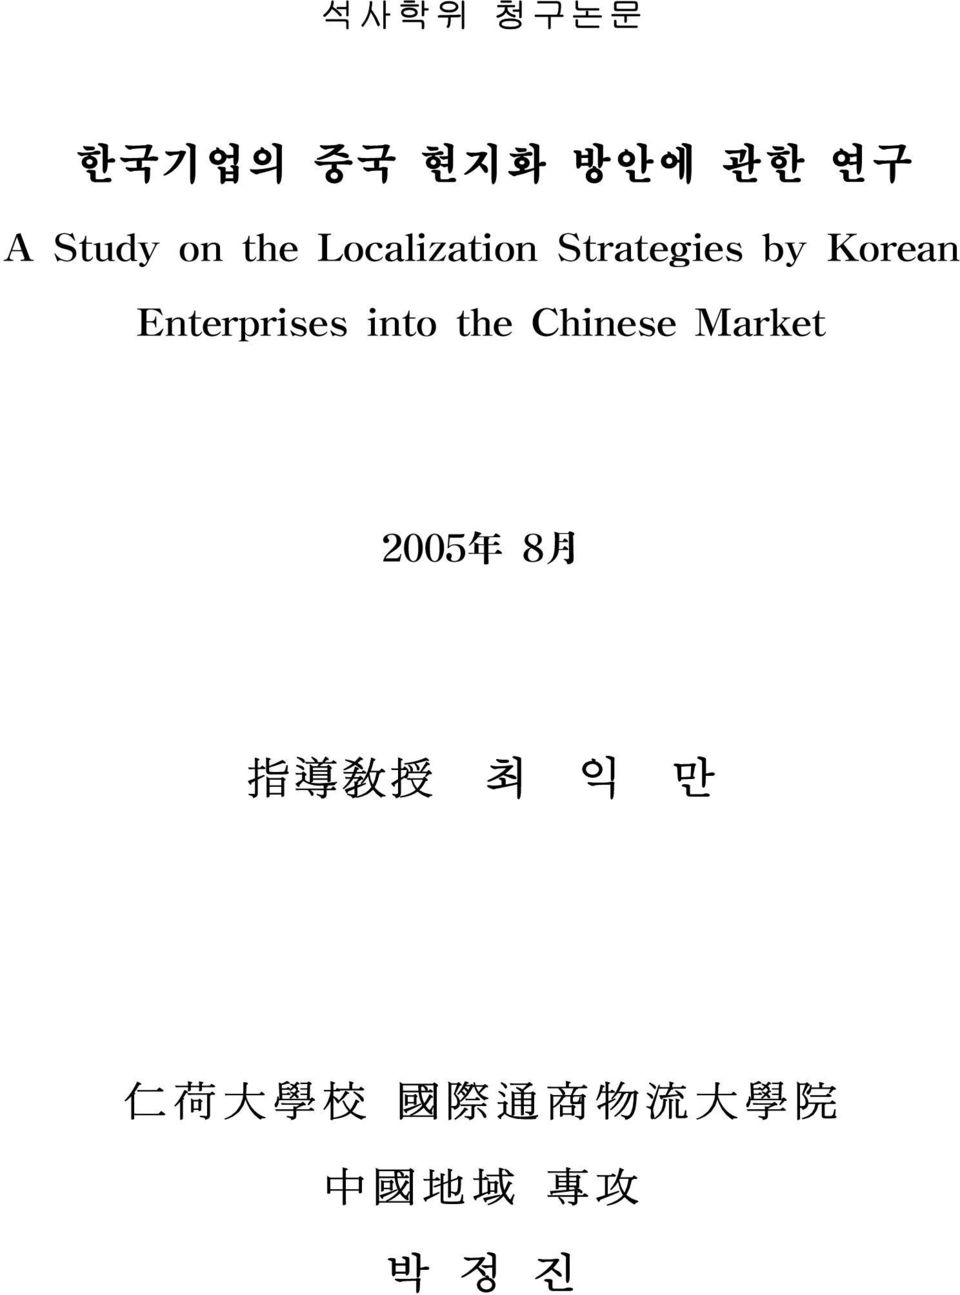 Enterprises into the Chinese Market 2005 年 8 月